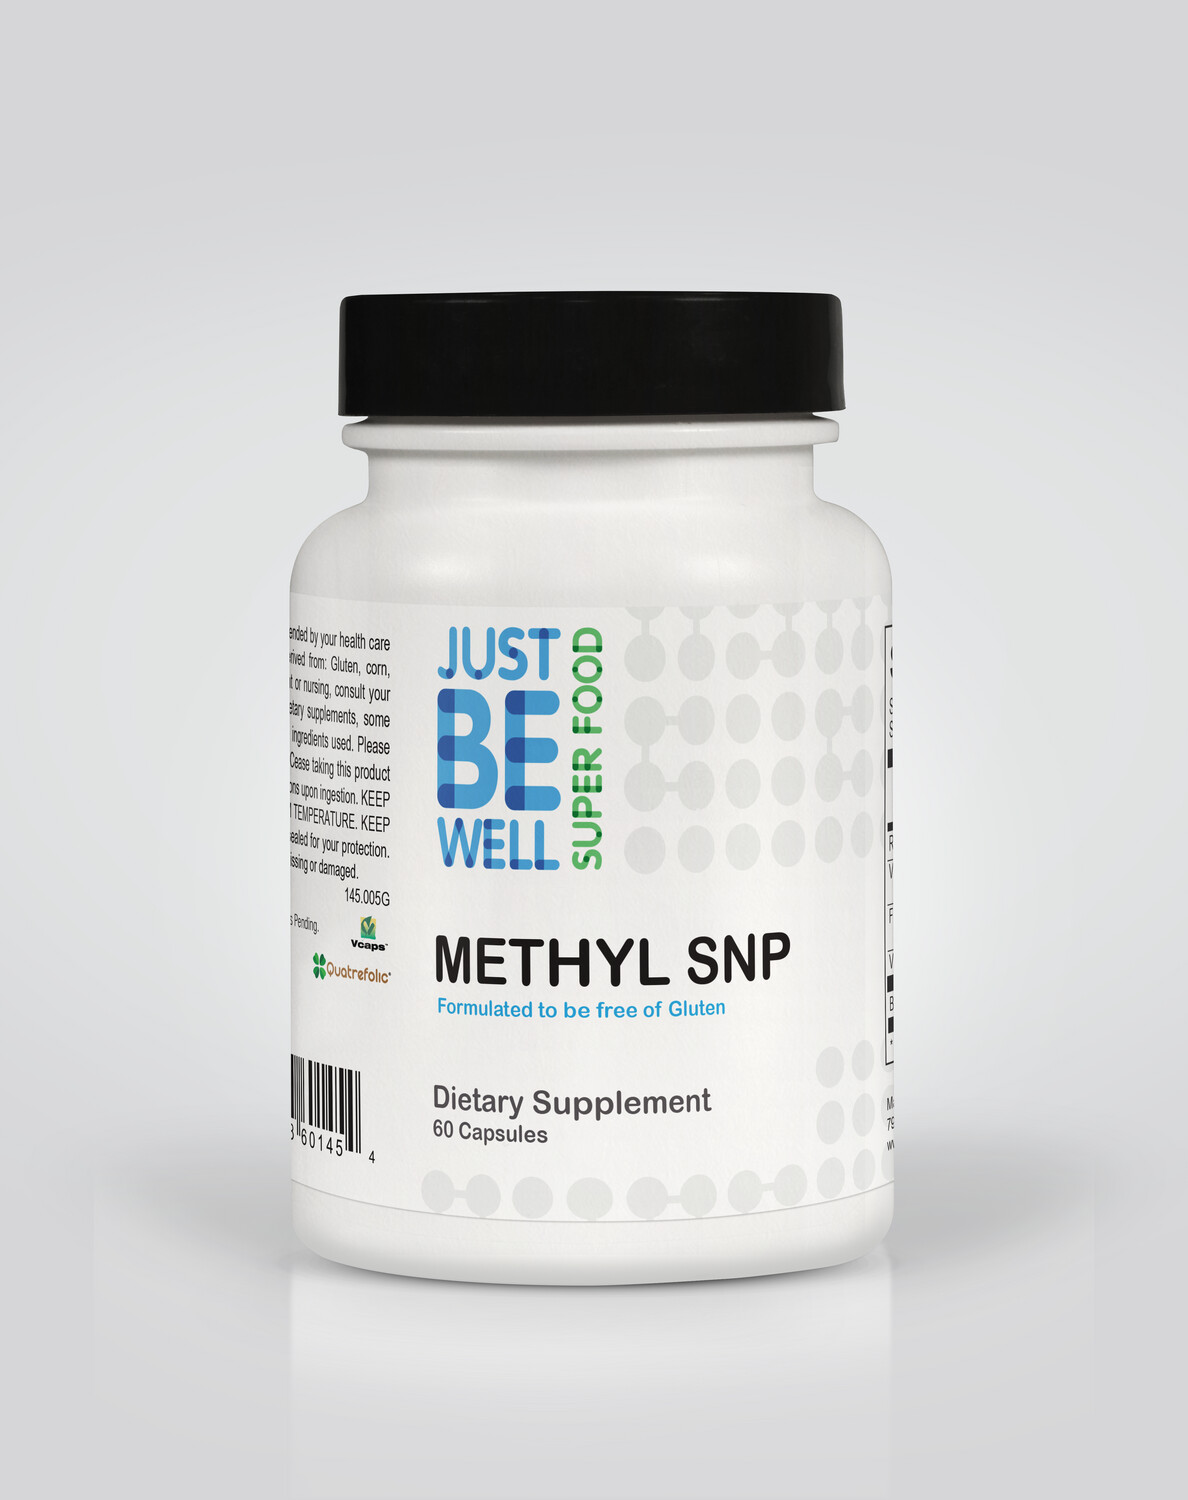 Methyl SNP